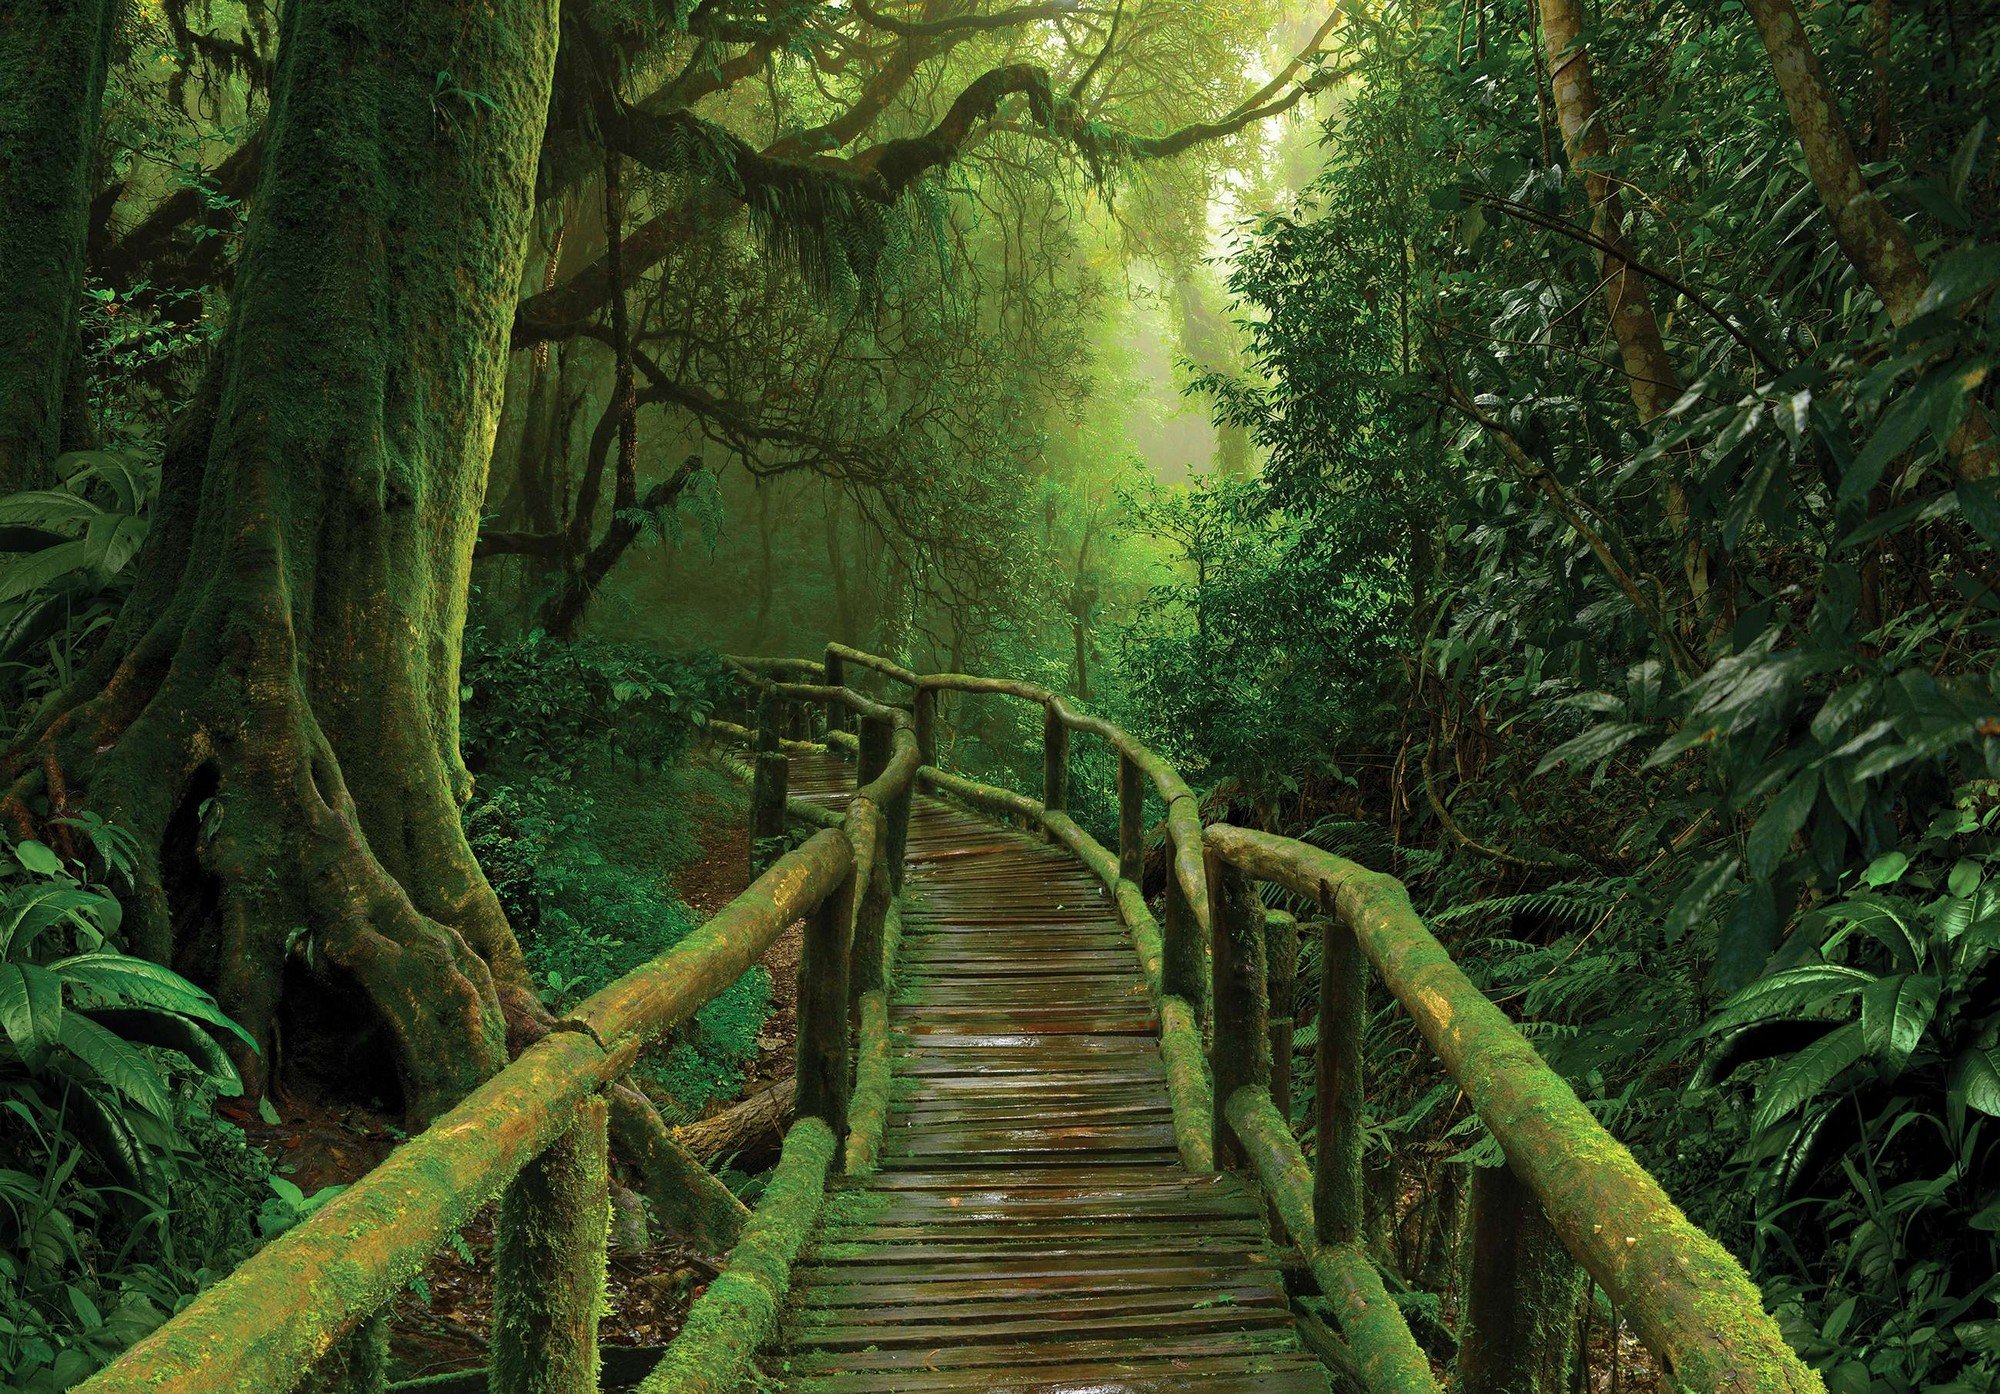 Vlies foto tapeta: Pješački most u džungli - 416x254 cm